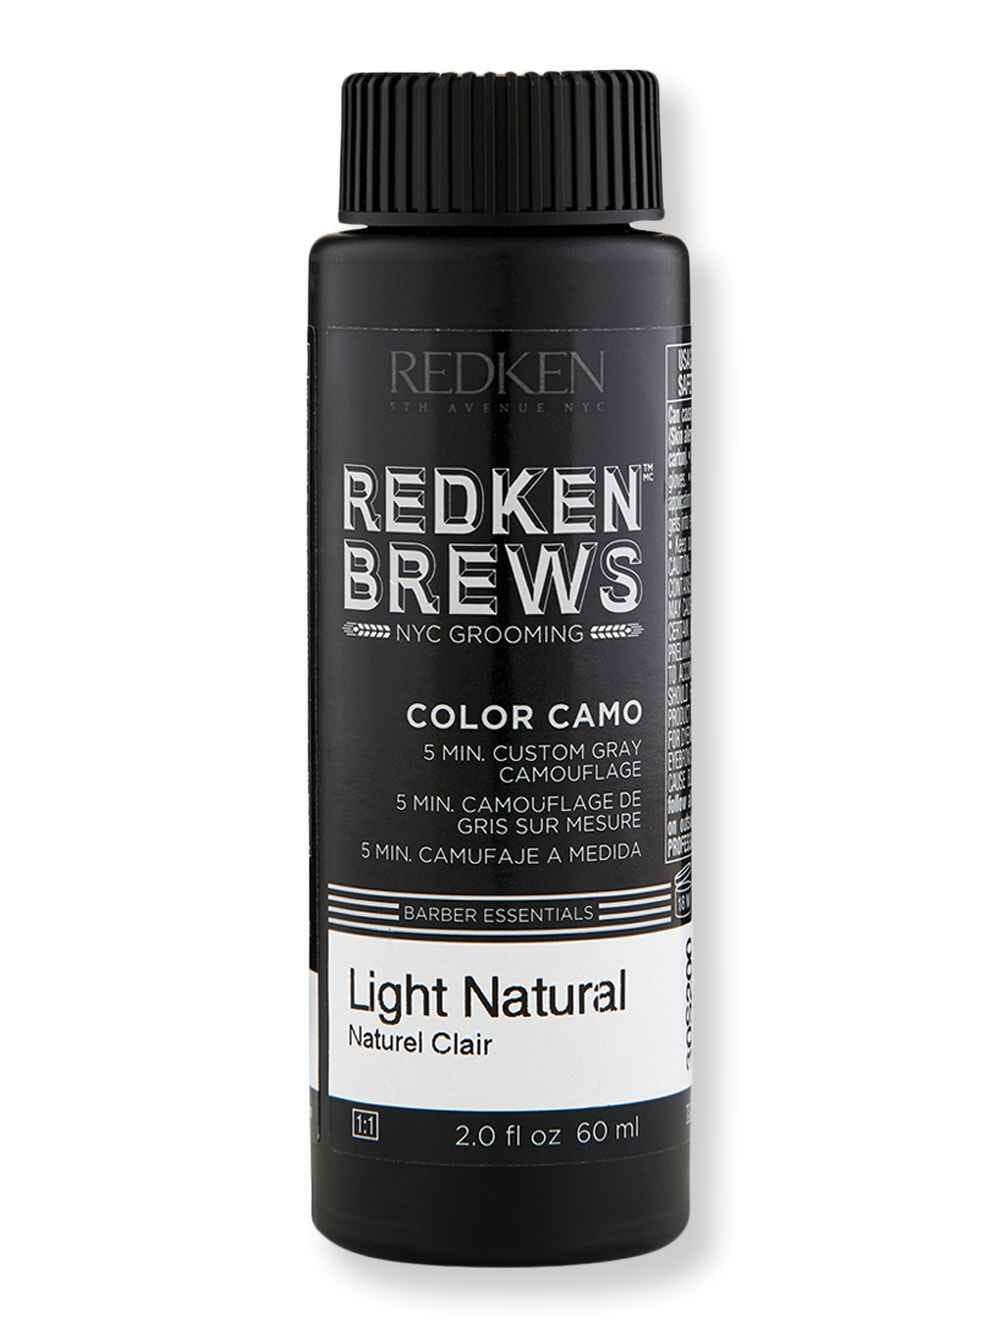 Redken Redken Brews Color Camo 2 oz60 ml8N Light Natural Styling Treatments 